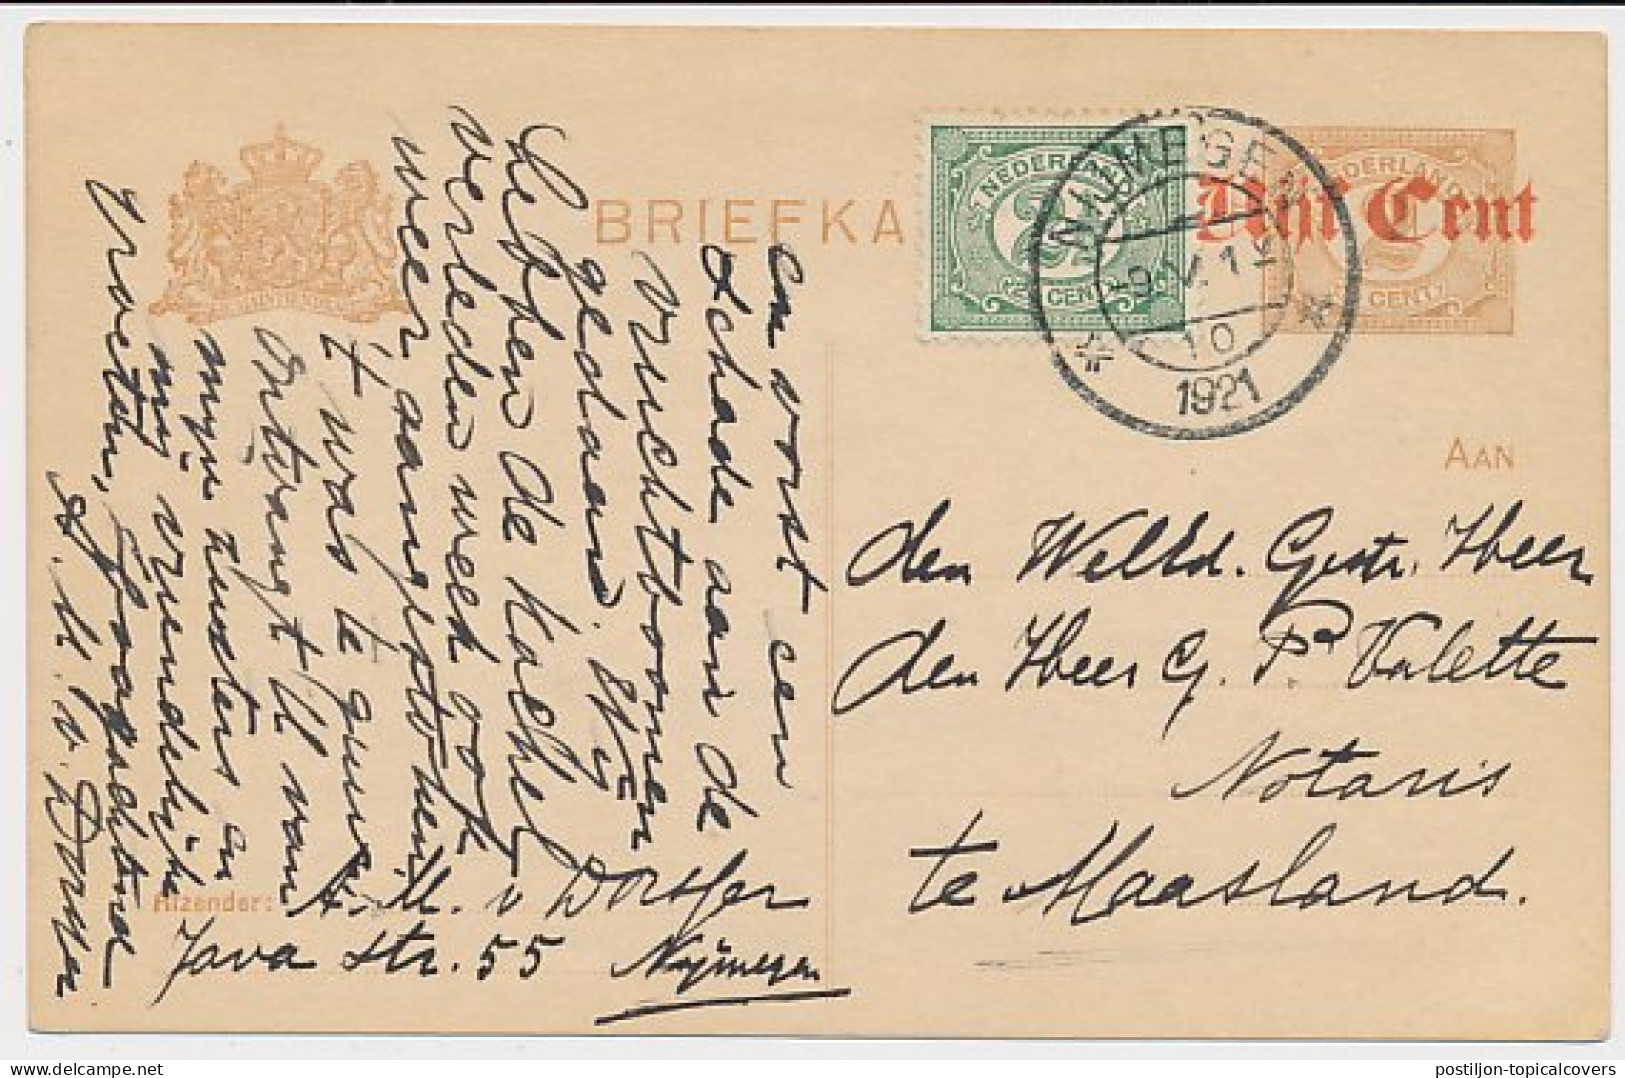 Briefkaart G. 107 A I / Bijfrankering Nijmegen - Maasland 1921 - Ganzsachen